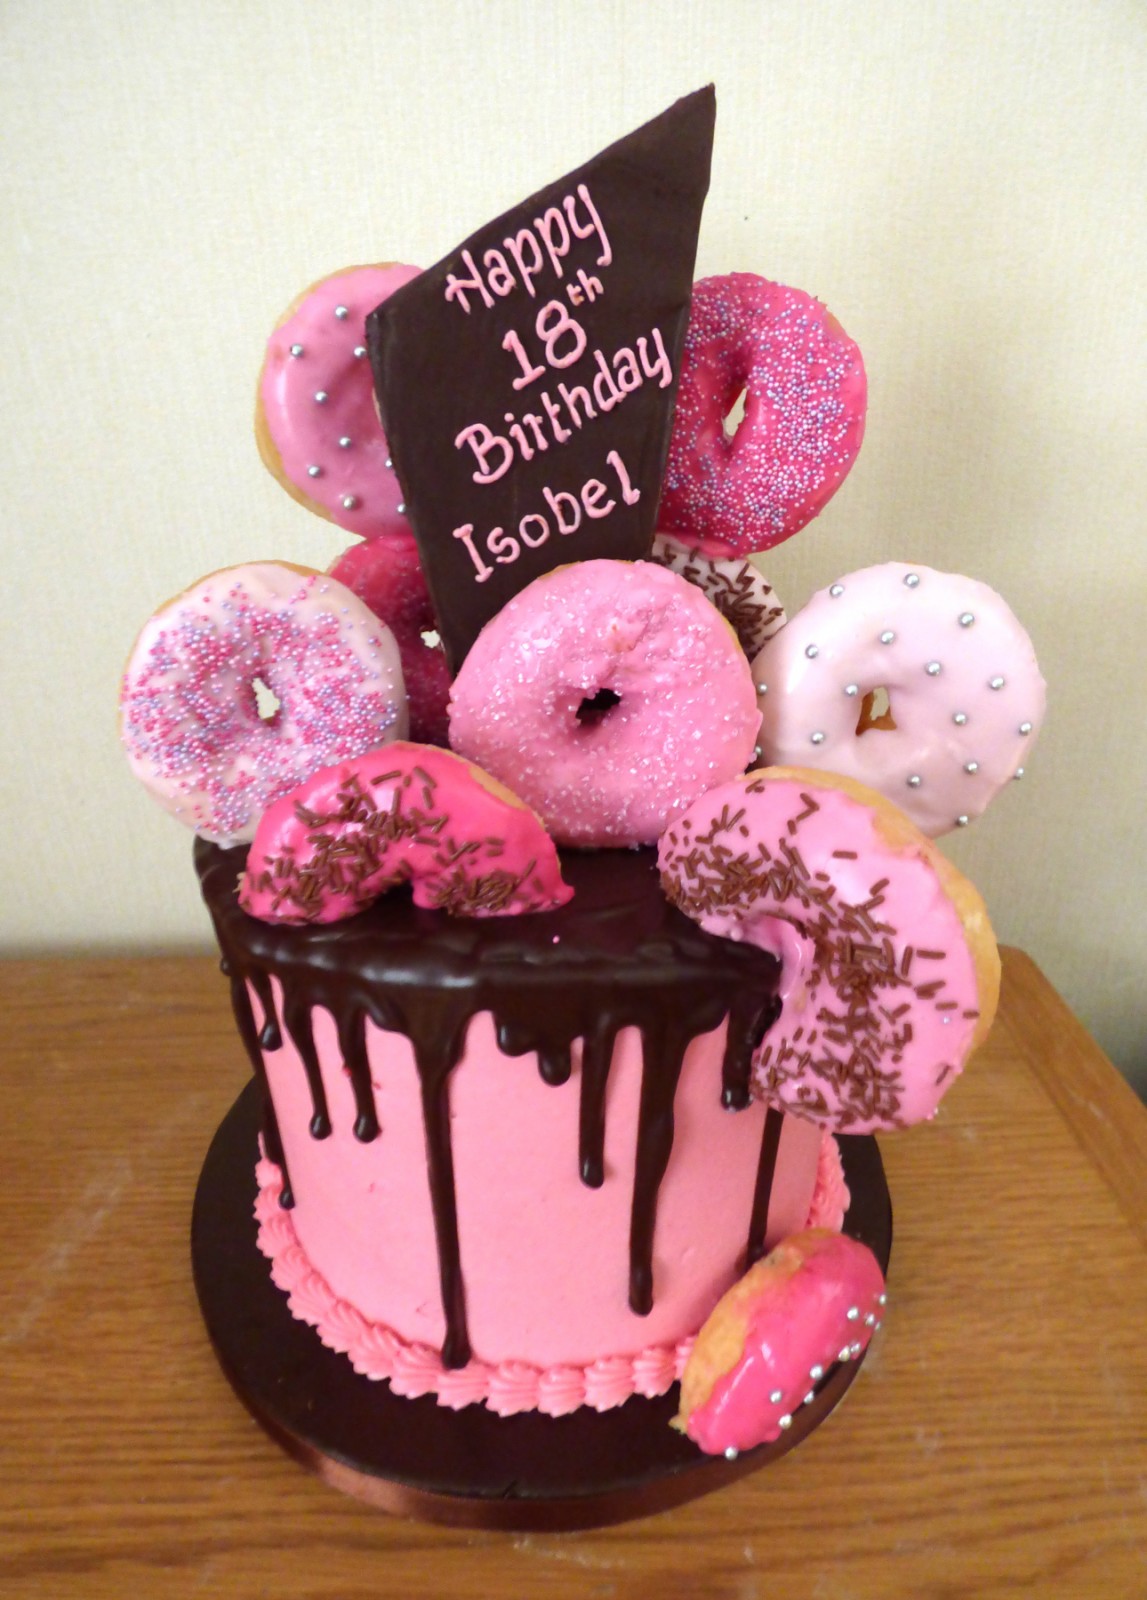 Donut Drip Cake Decorating | So Yummy Donut Cake Recipe You'll Love | Tasty Donut  Cake - YouTube